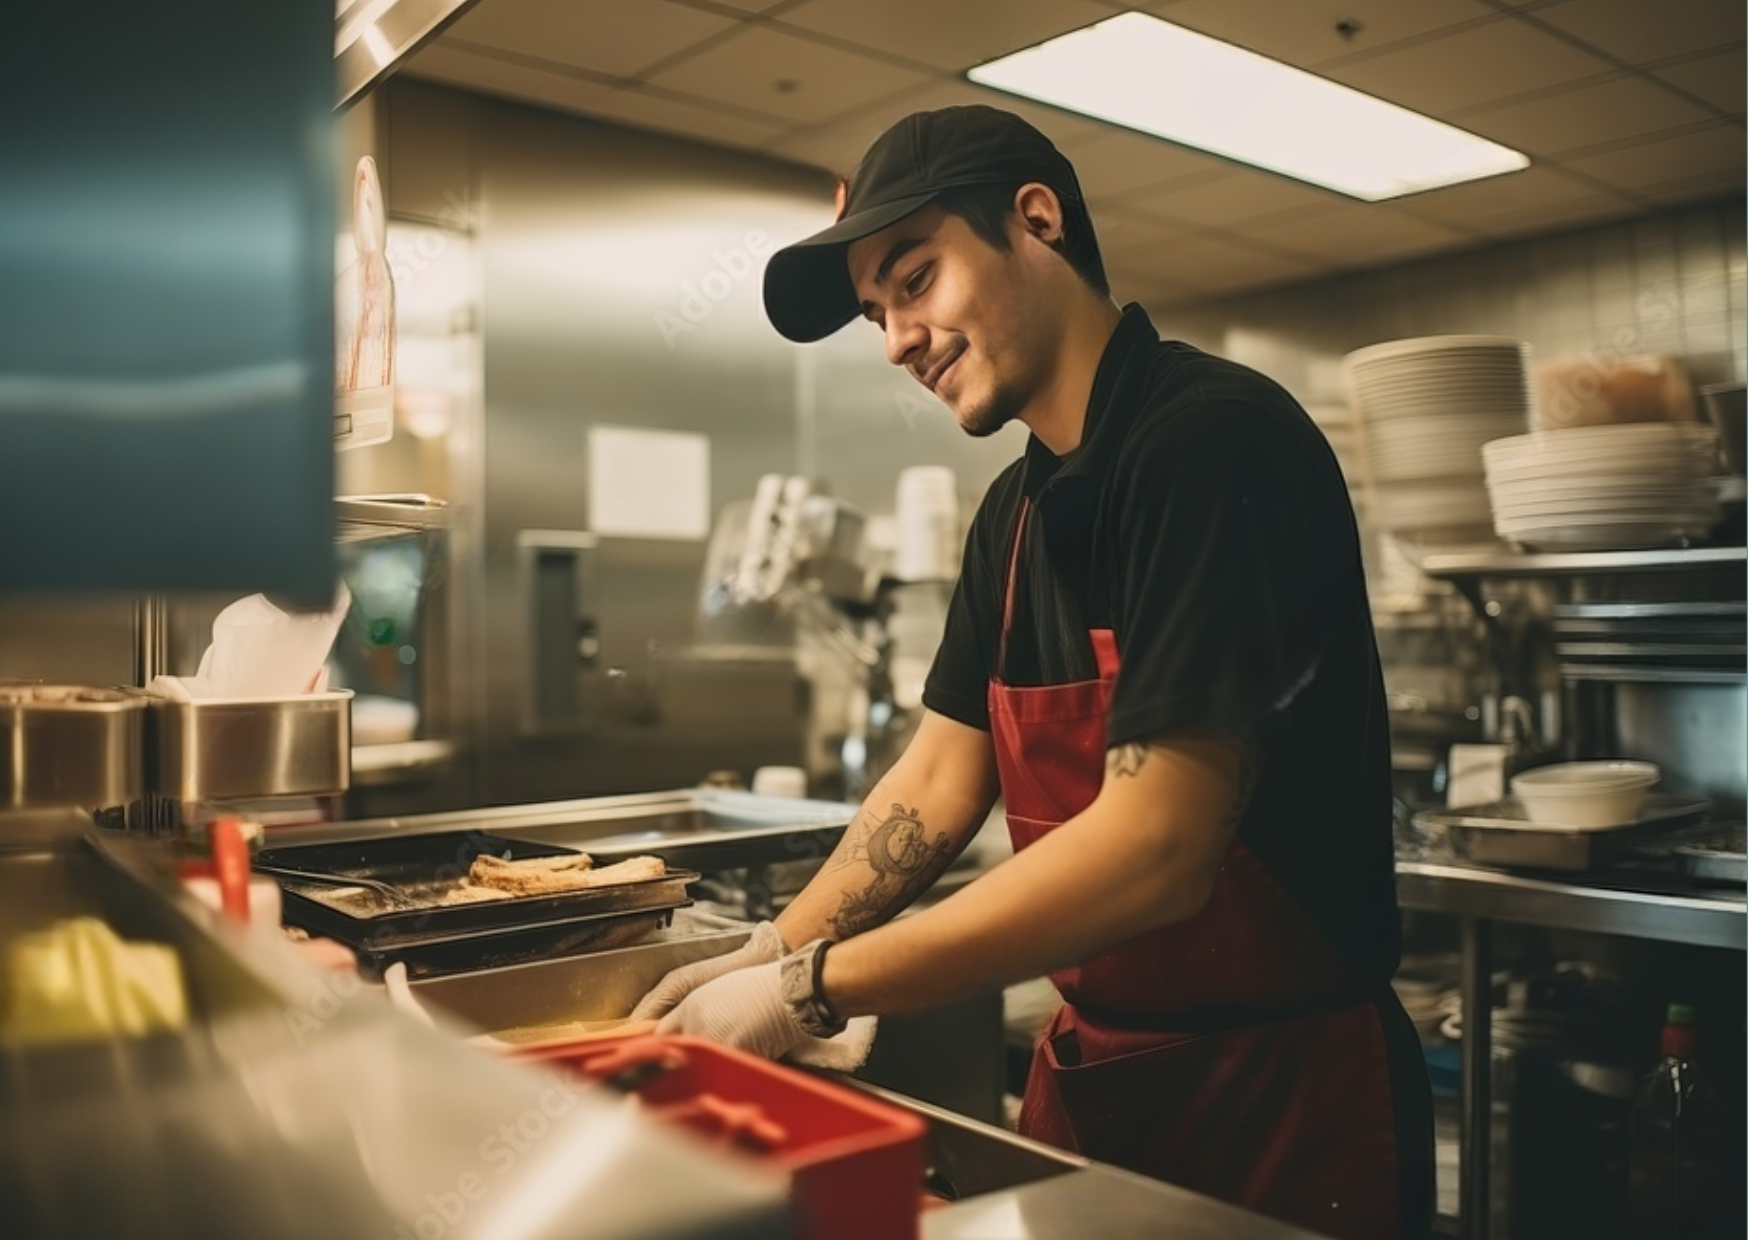 Helping quick service restaurants WorkSmarter